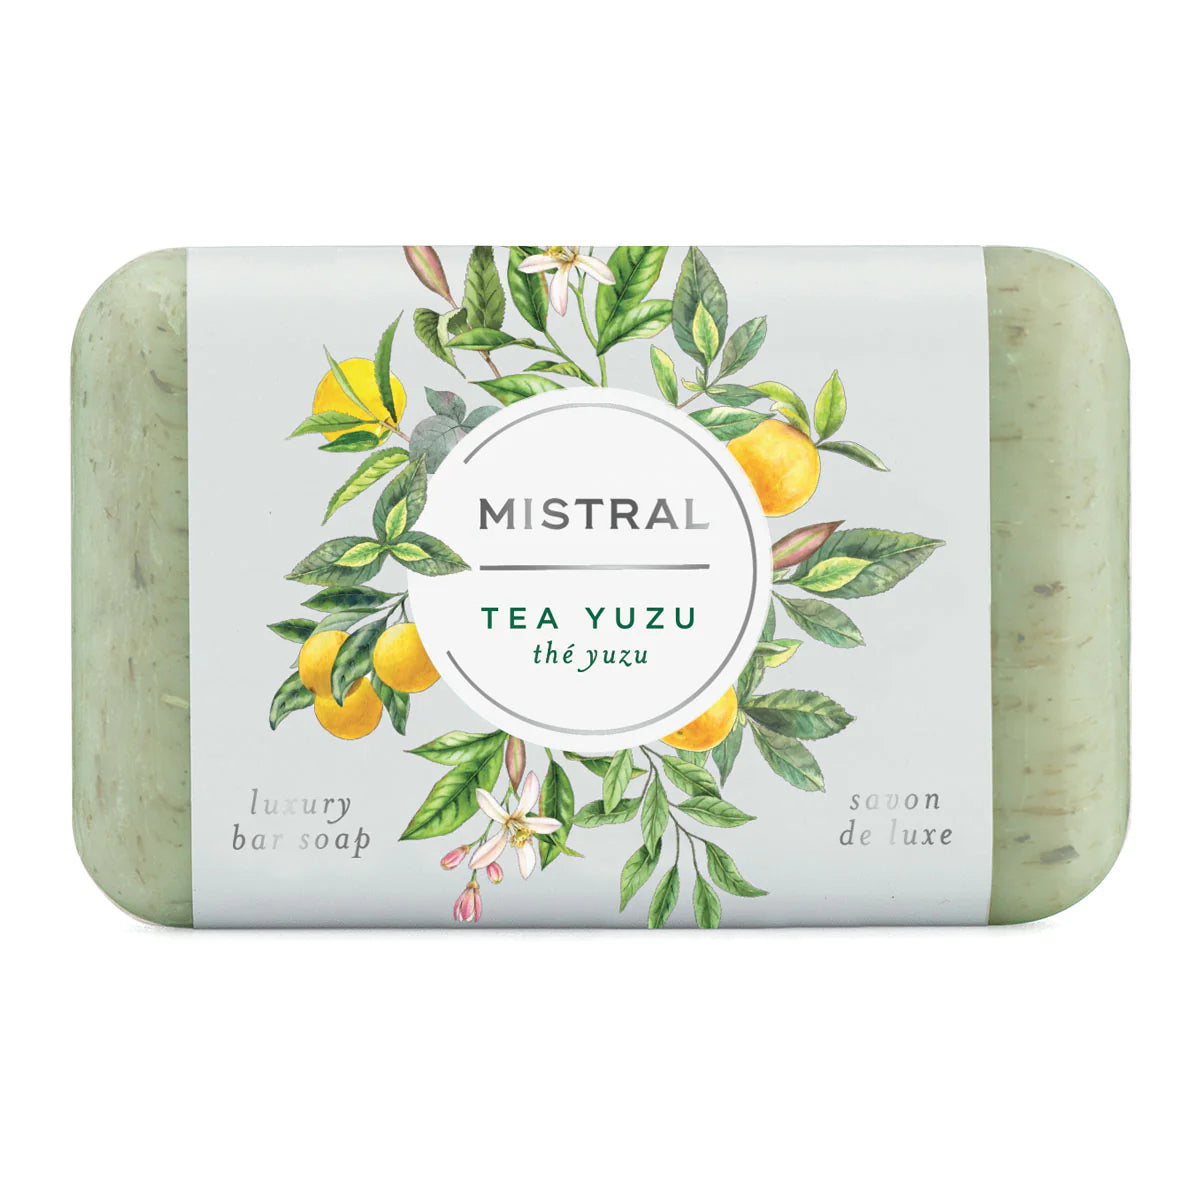 Mistral TEA YUZU CLASSIC BAR SOAP - Women's